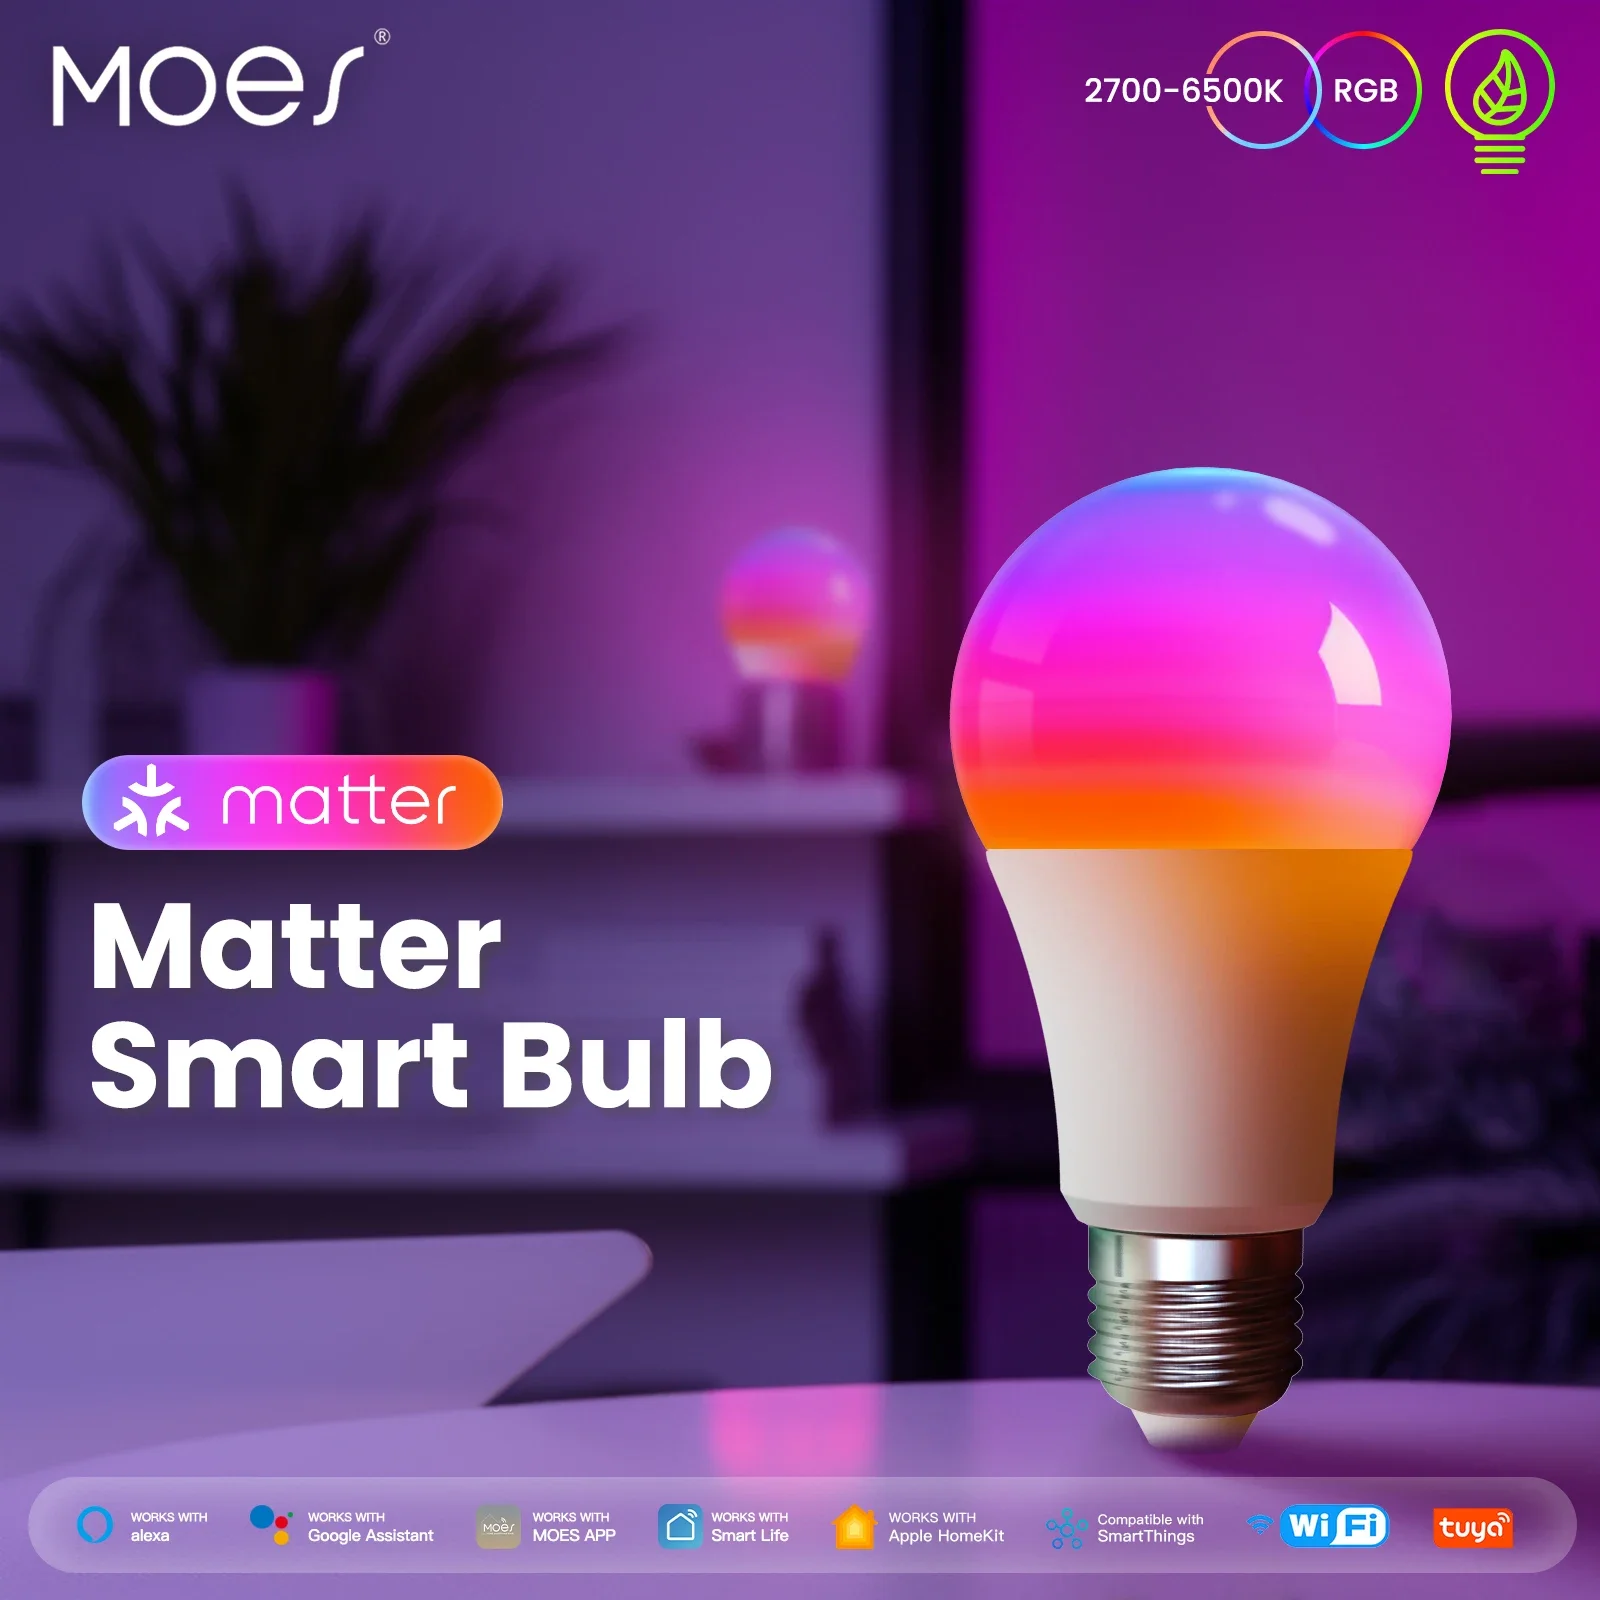 

MOES Tuya Matter WiFi Smart Bulb Dimmable Led Light 16 Million RGB Colors E27 Bubble light Voice Control Alexa Google Home